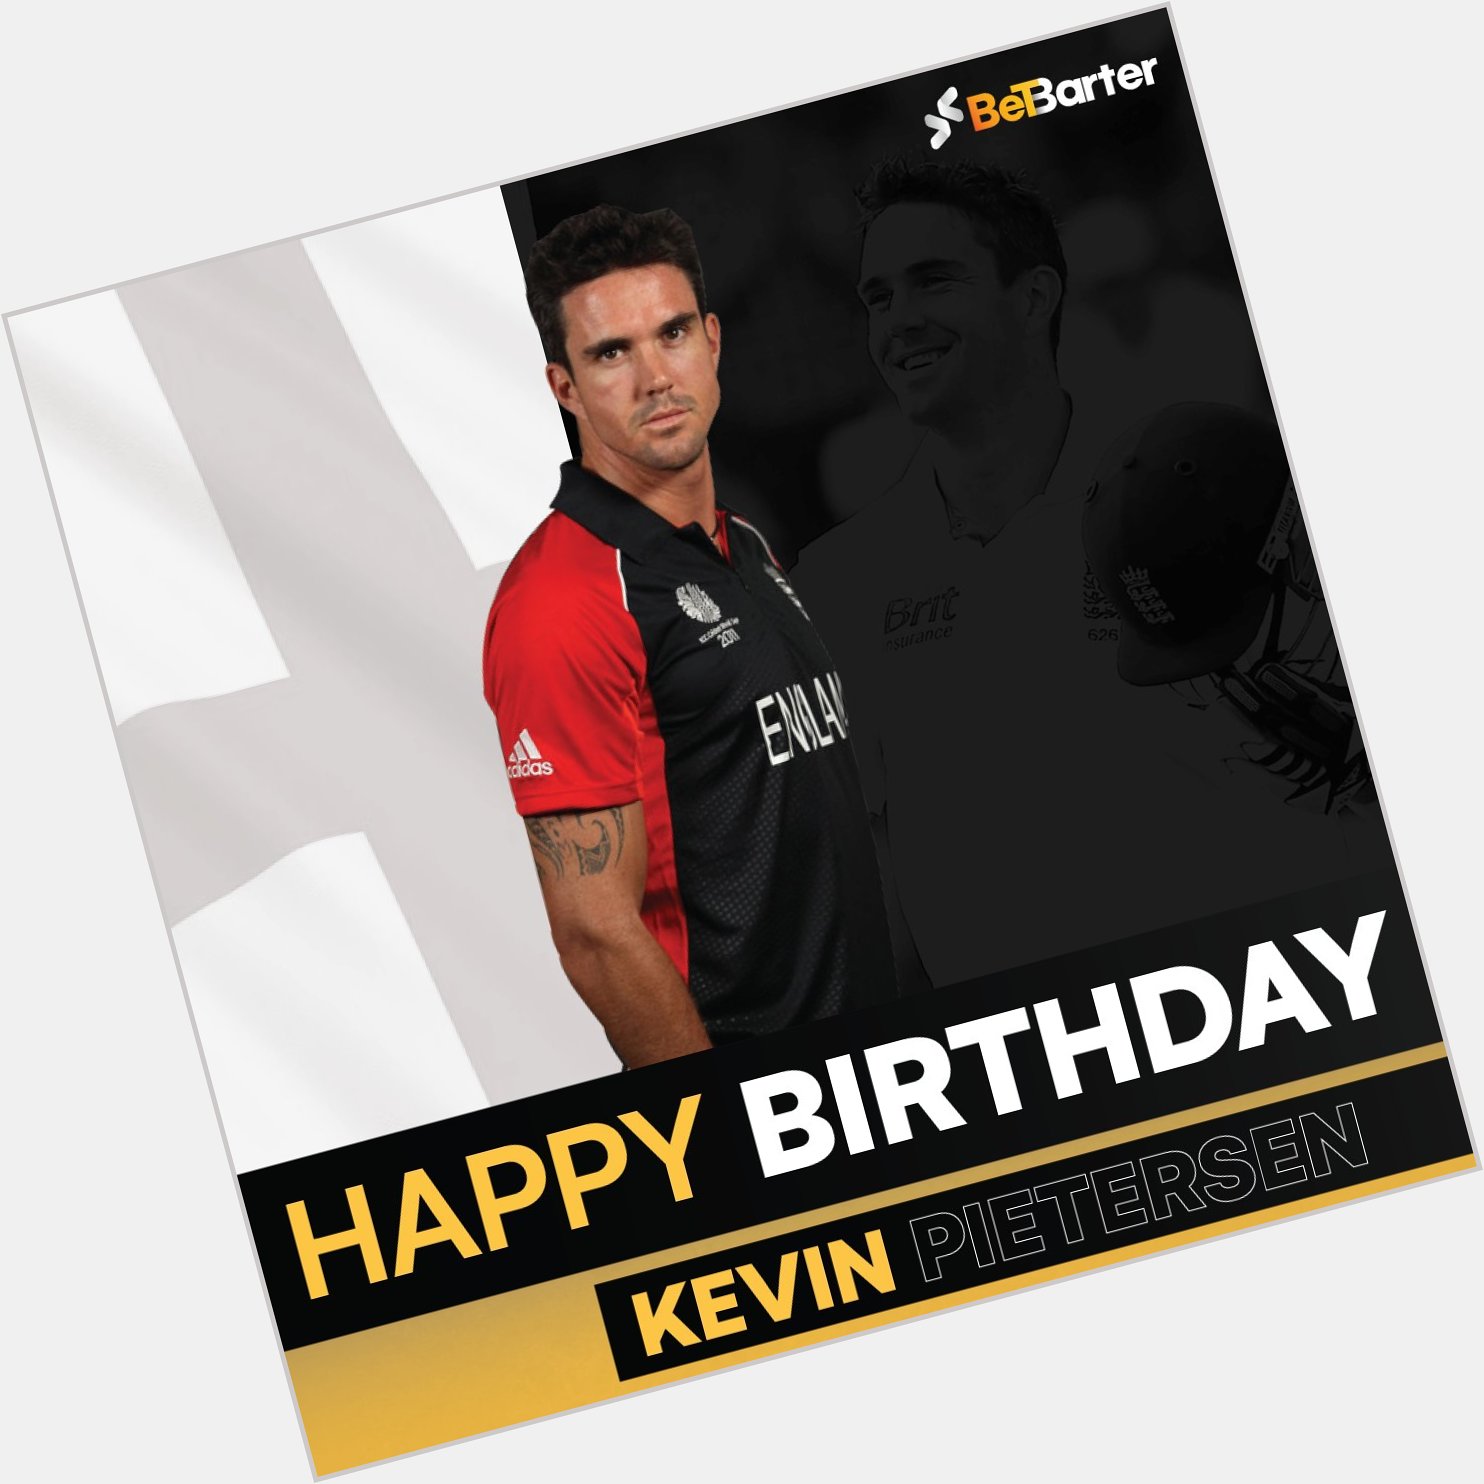 Wishing Kevin Pietersen, a very happy birthday!      